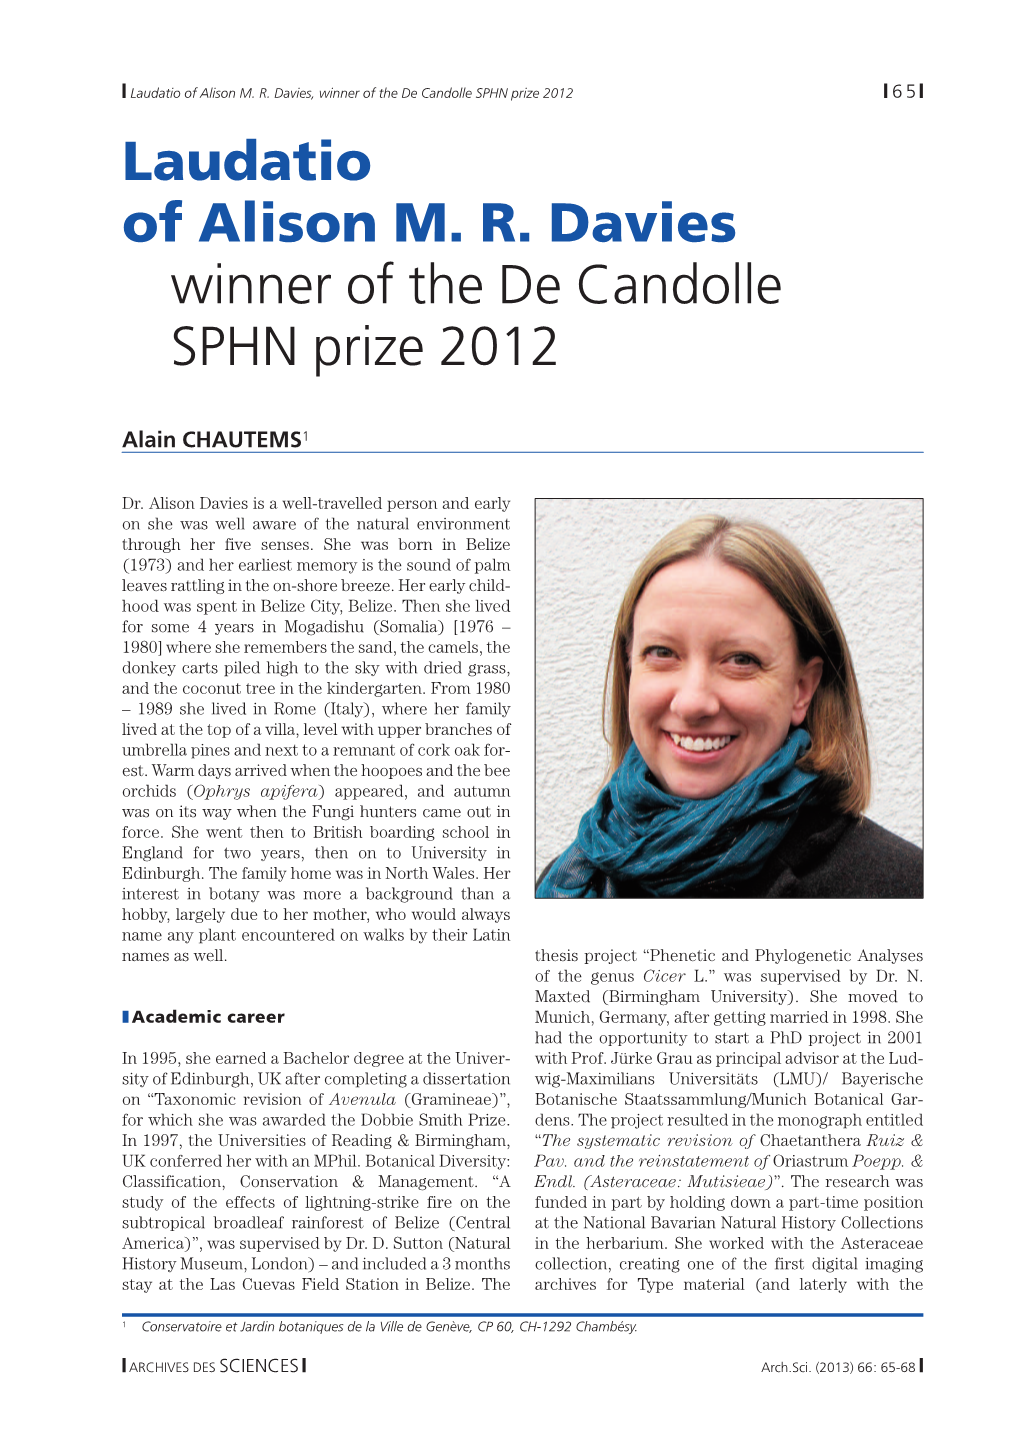 Laudatio of Alison M. R. Davies Winner of the De Candolle SPHN Prize 2012